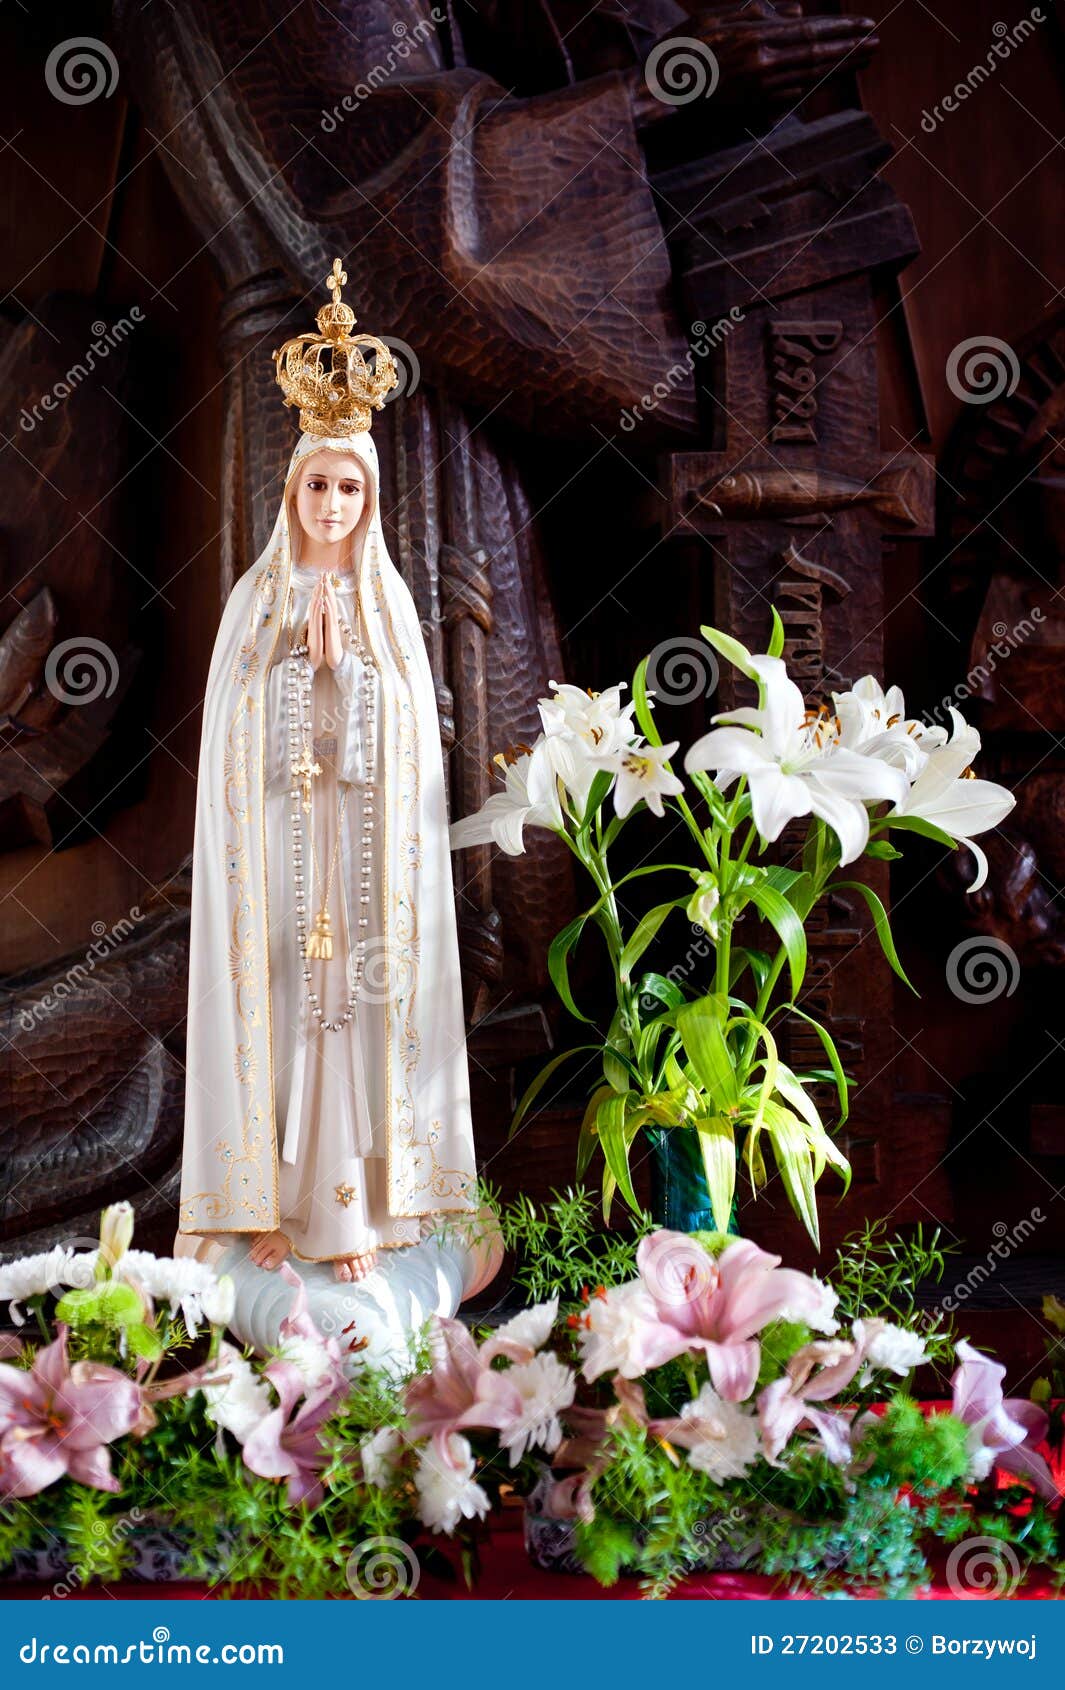 Statue of Mary stock image. Image of spirit, spirituality - 27202533